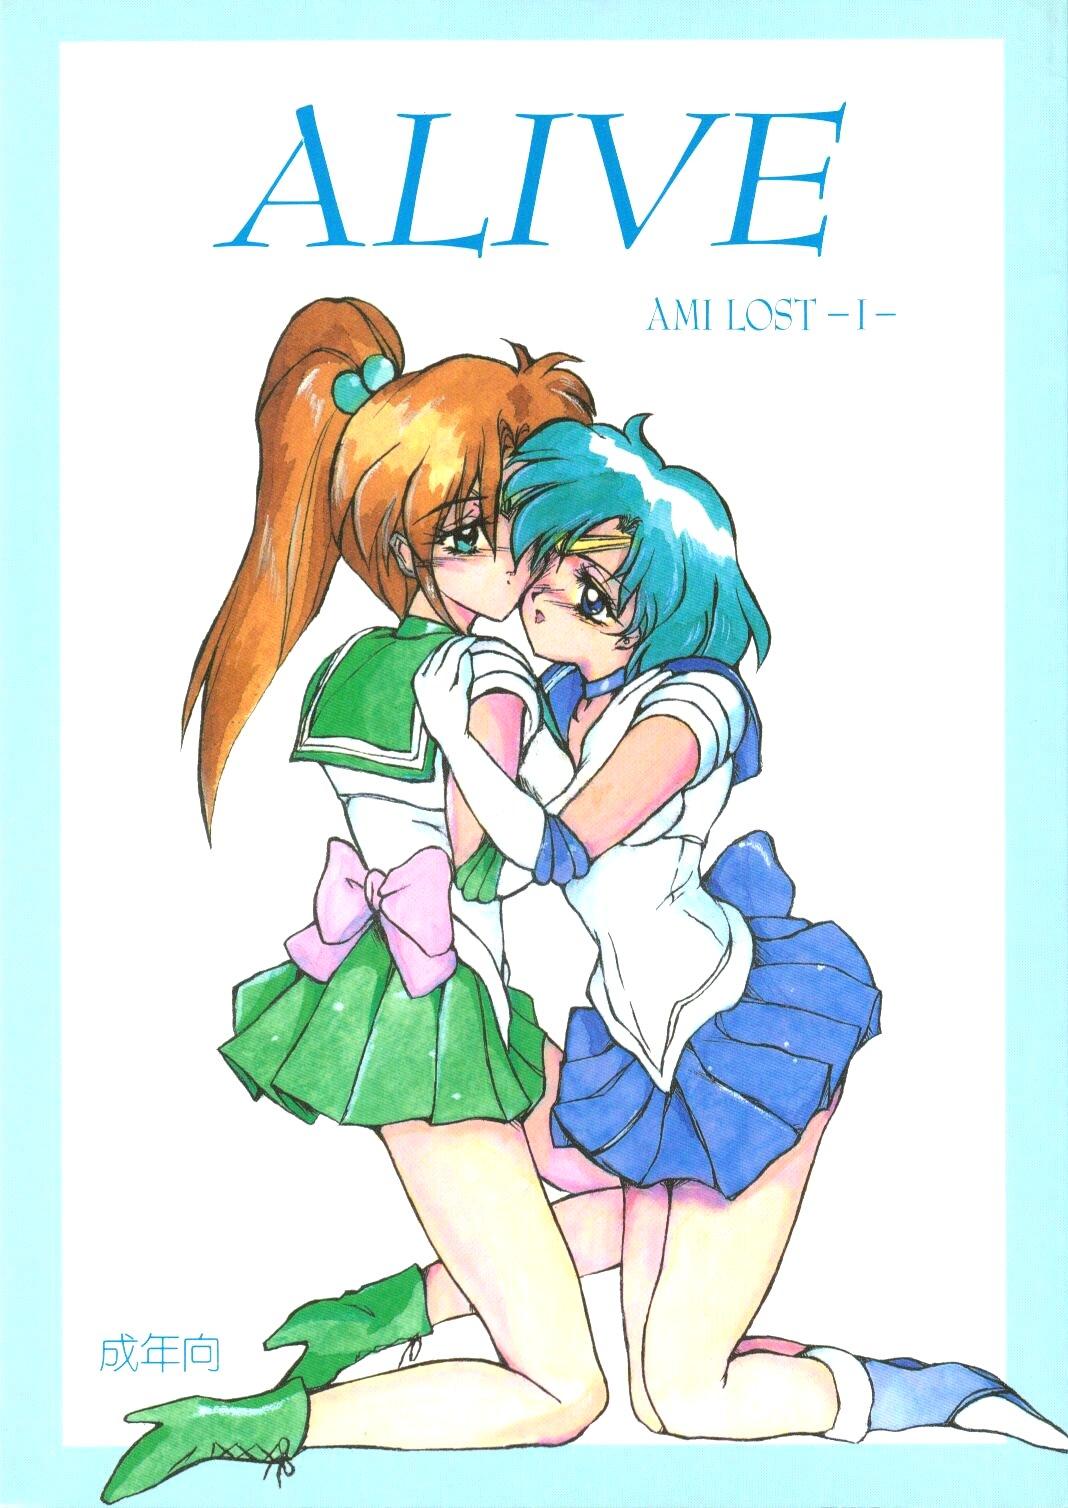 Twinks ALIVE AMI LOST - Sailor moon Lezbi - Page 1